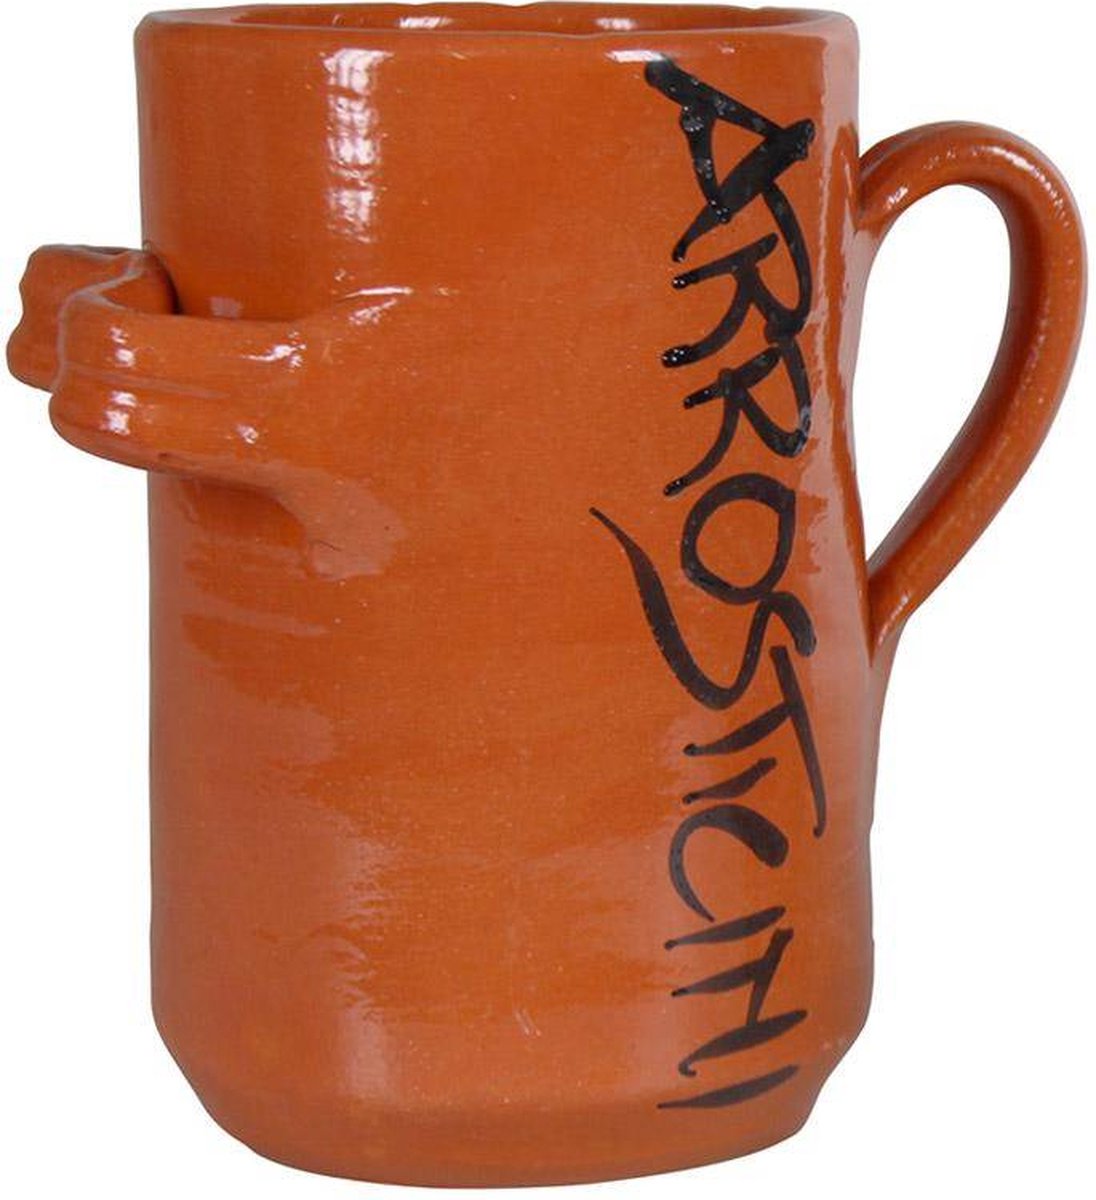 Spiedini Arrosticini Pot 20 Piccolo - Traditionele terracotta pot om ca. 20 arrosticini of (vlees)spiesjes warm uit te serveren - 18 cm hoog, 10 cm doorsnee - Materiaal: keramiek